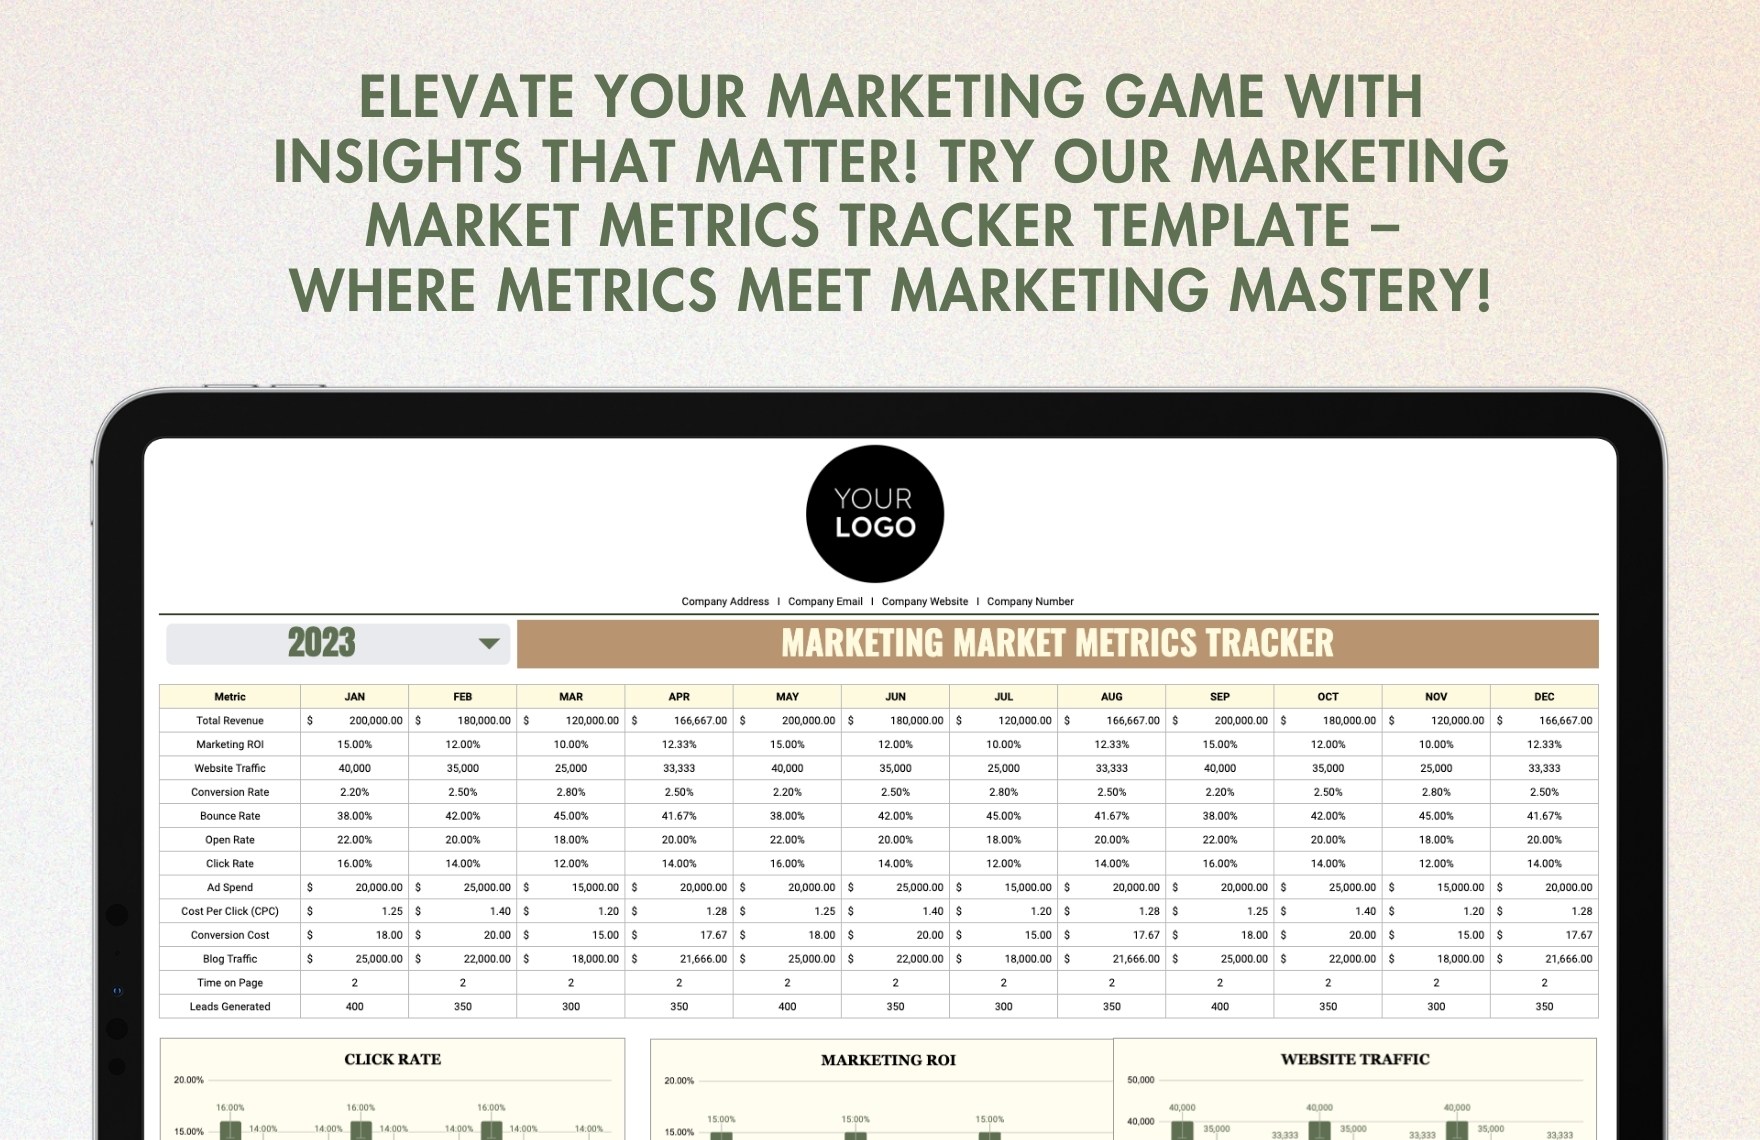 Marketing Market Metrics Tracker Template